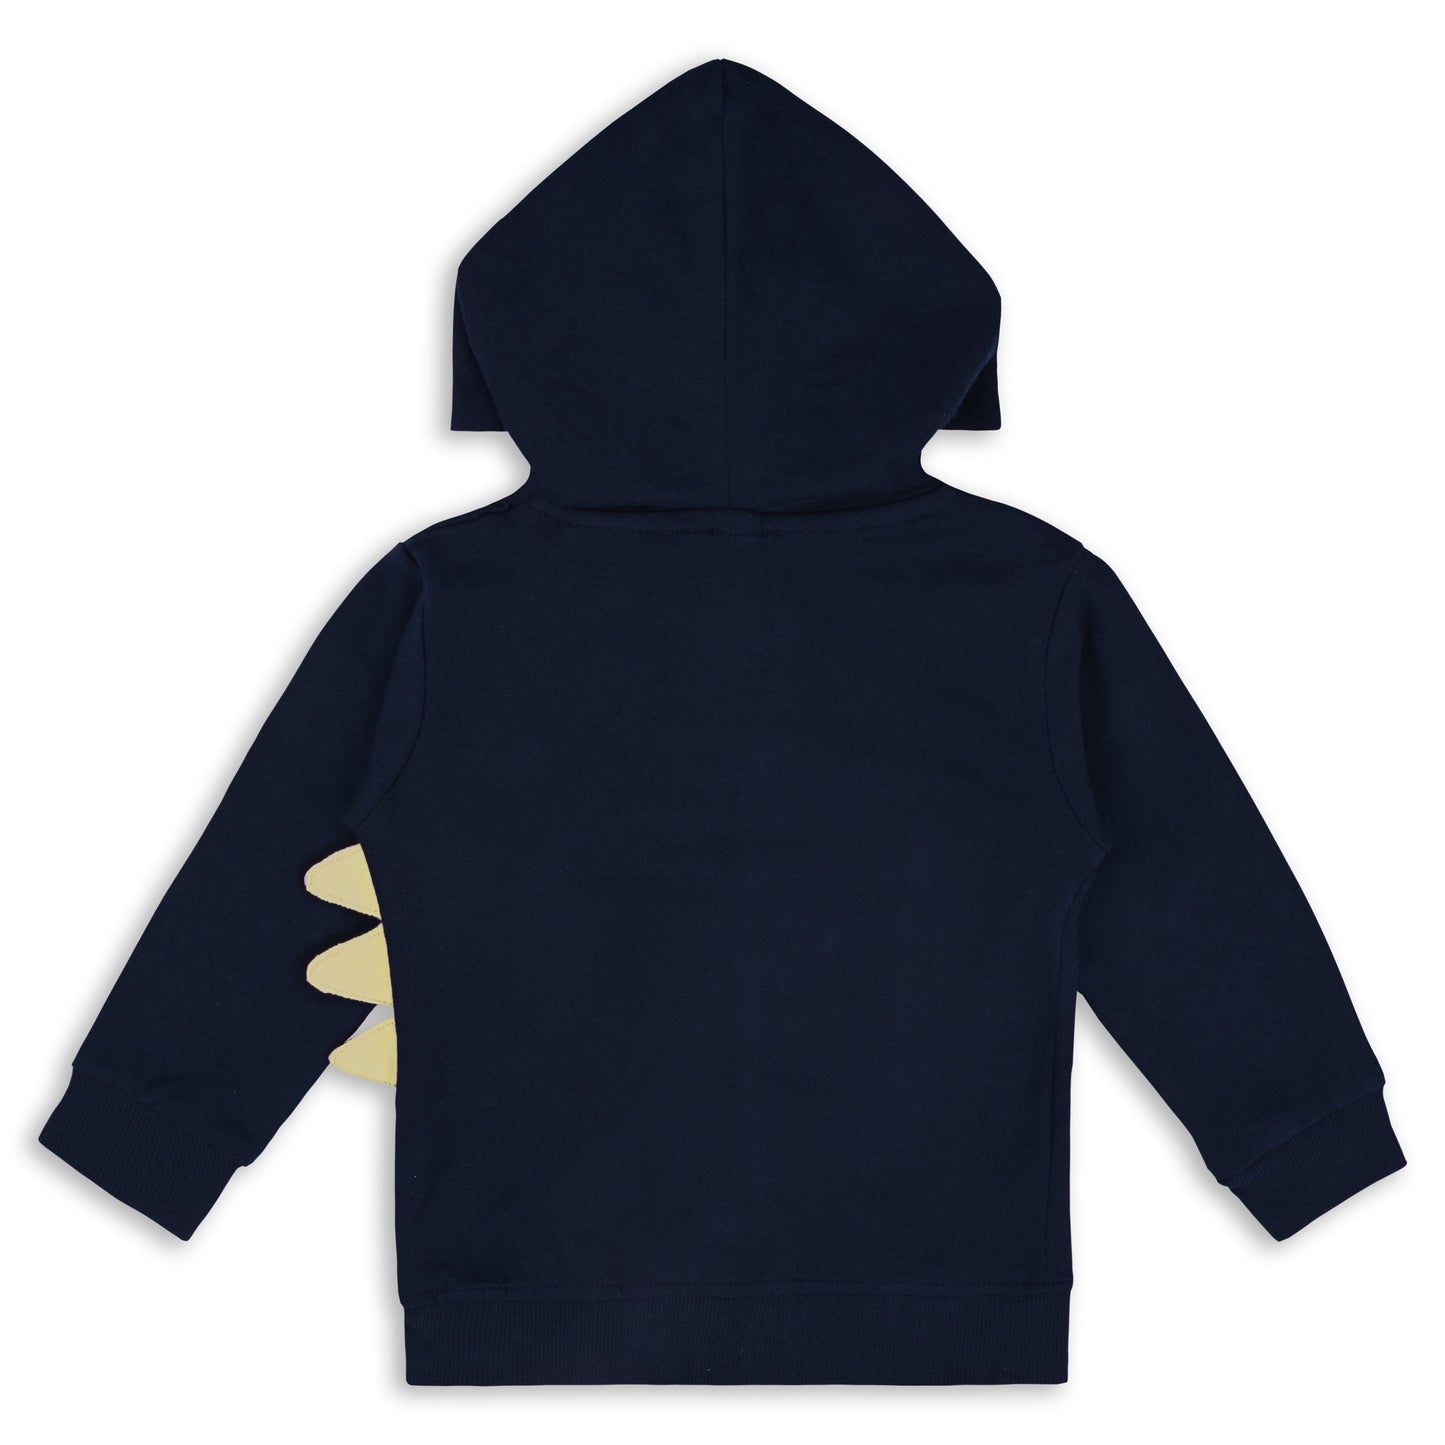 Wishkaro Unisex Cotton Applique Full Sleeve Hooded Sweatshirt-T304nb